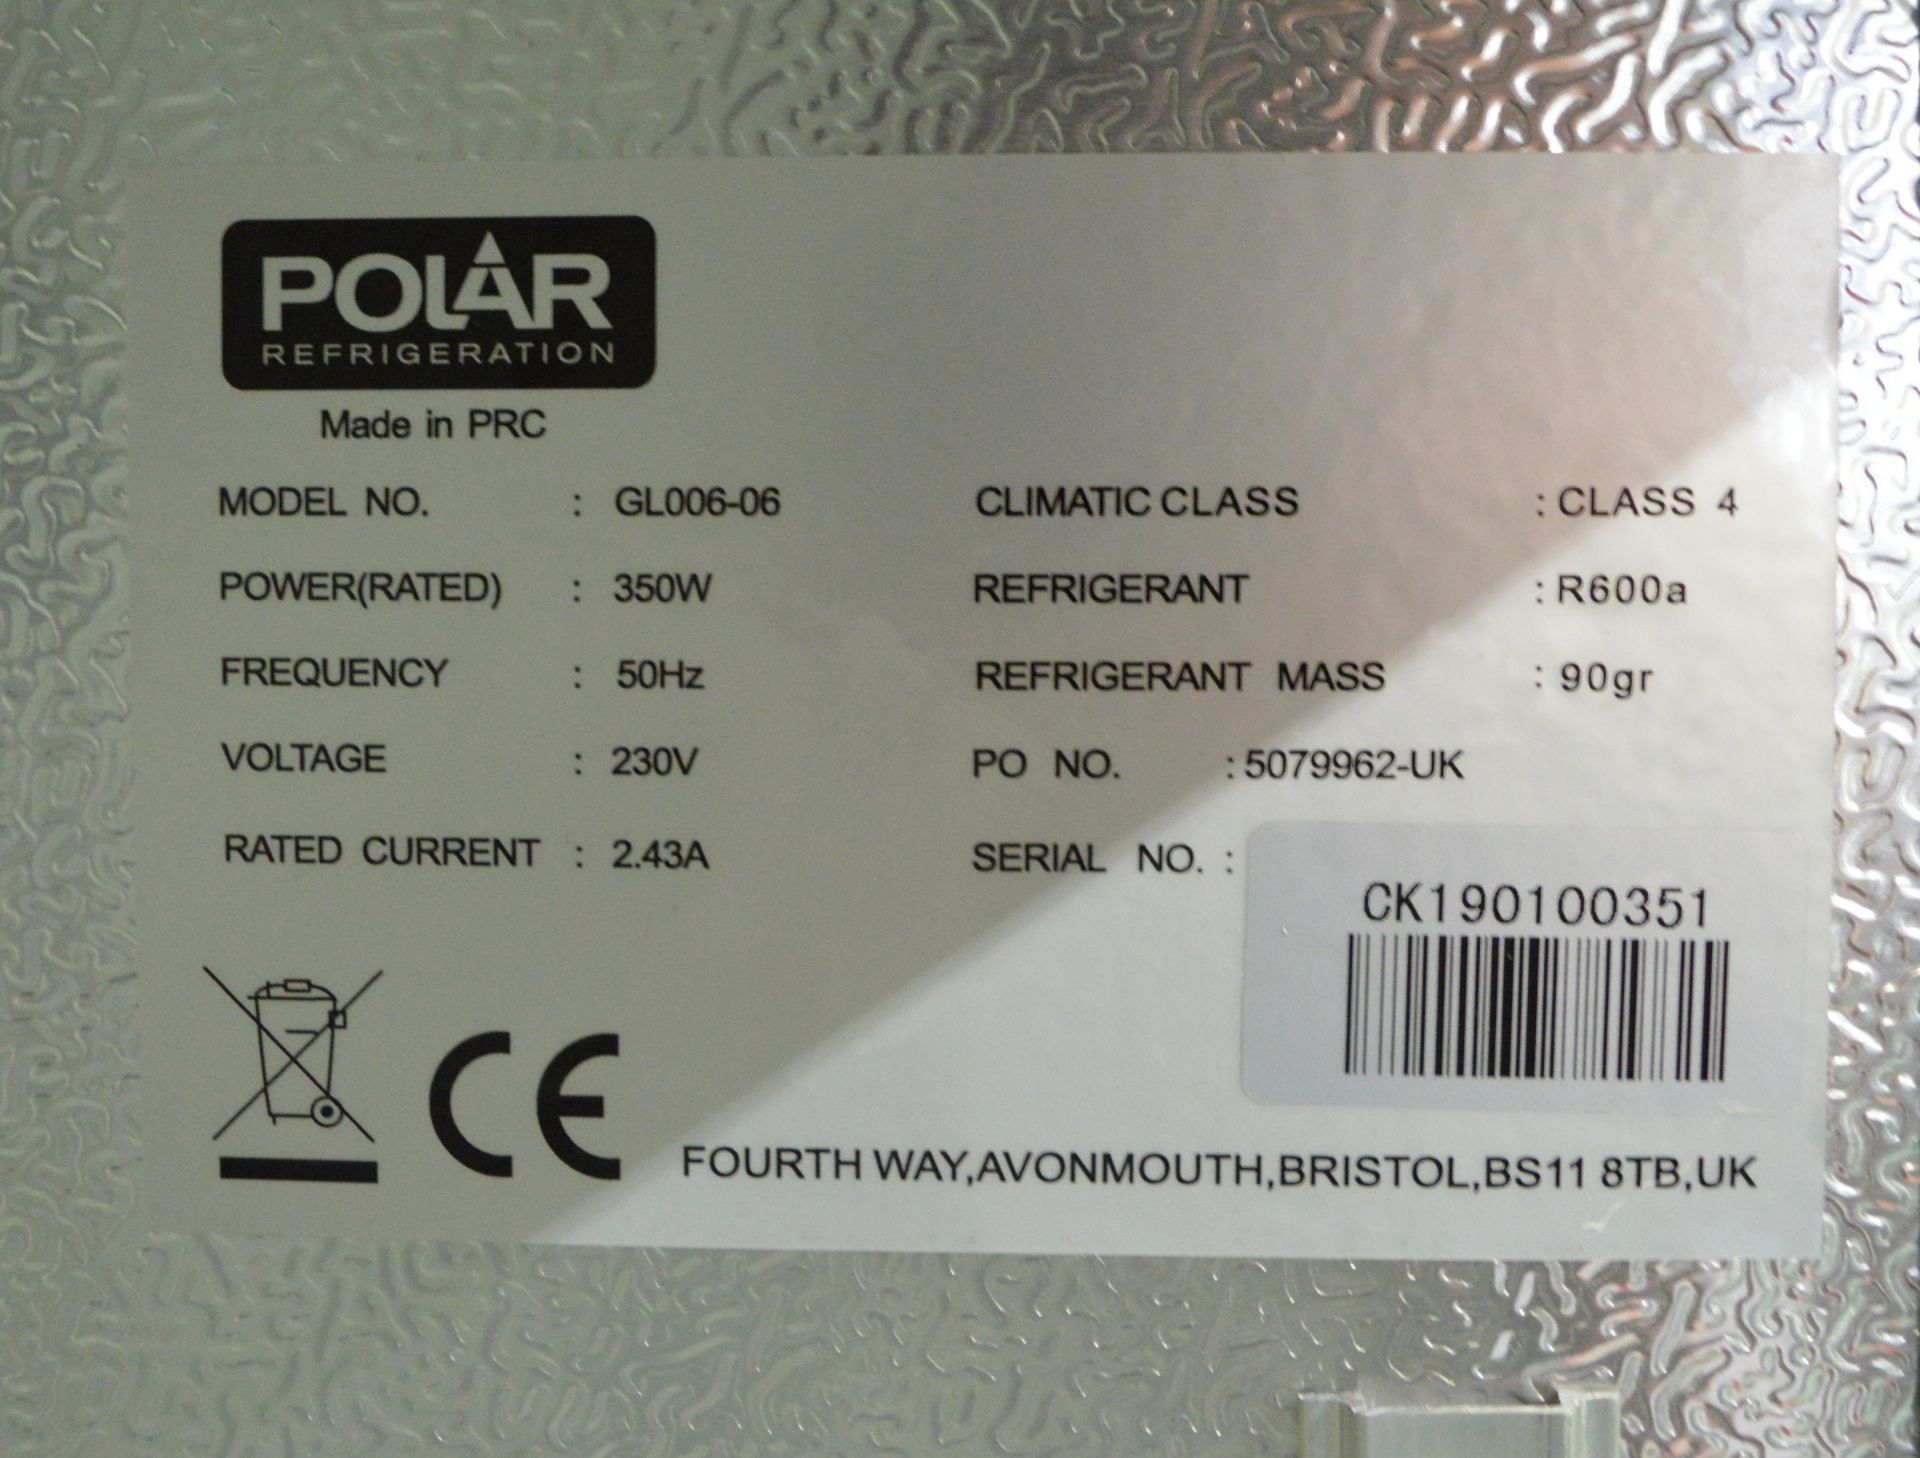 Polar GL006-06 3 Sliding Door Drinks Chiller 330ltr - L1350 x W530 x H890mm - Image 2 of 3